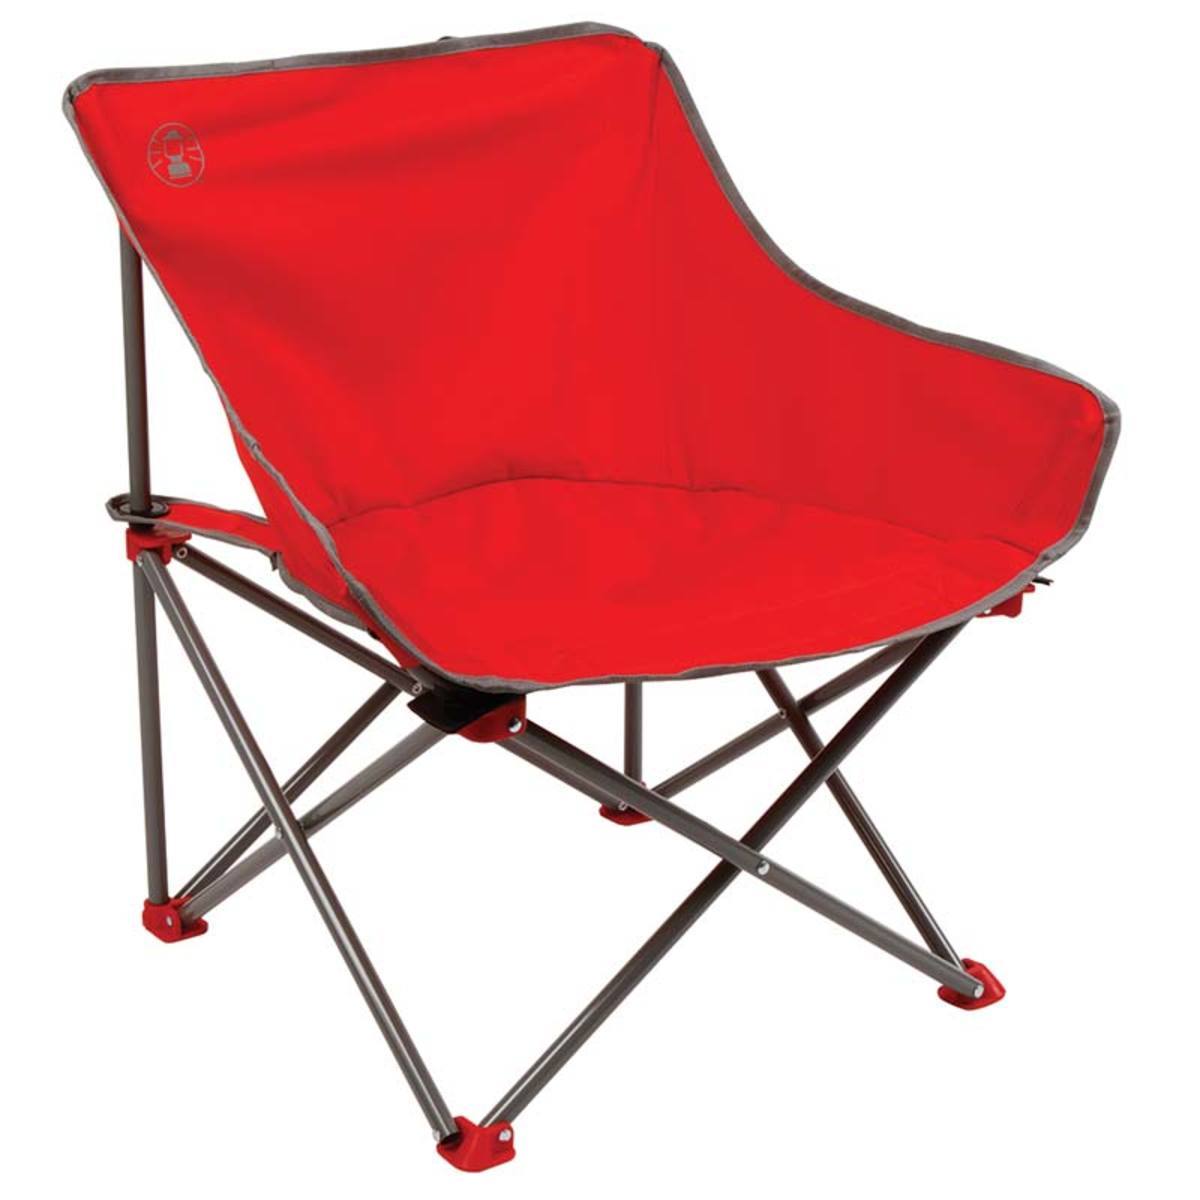 Coleman Kickback Moon Chair in Red